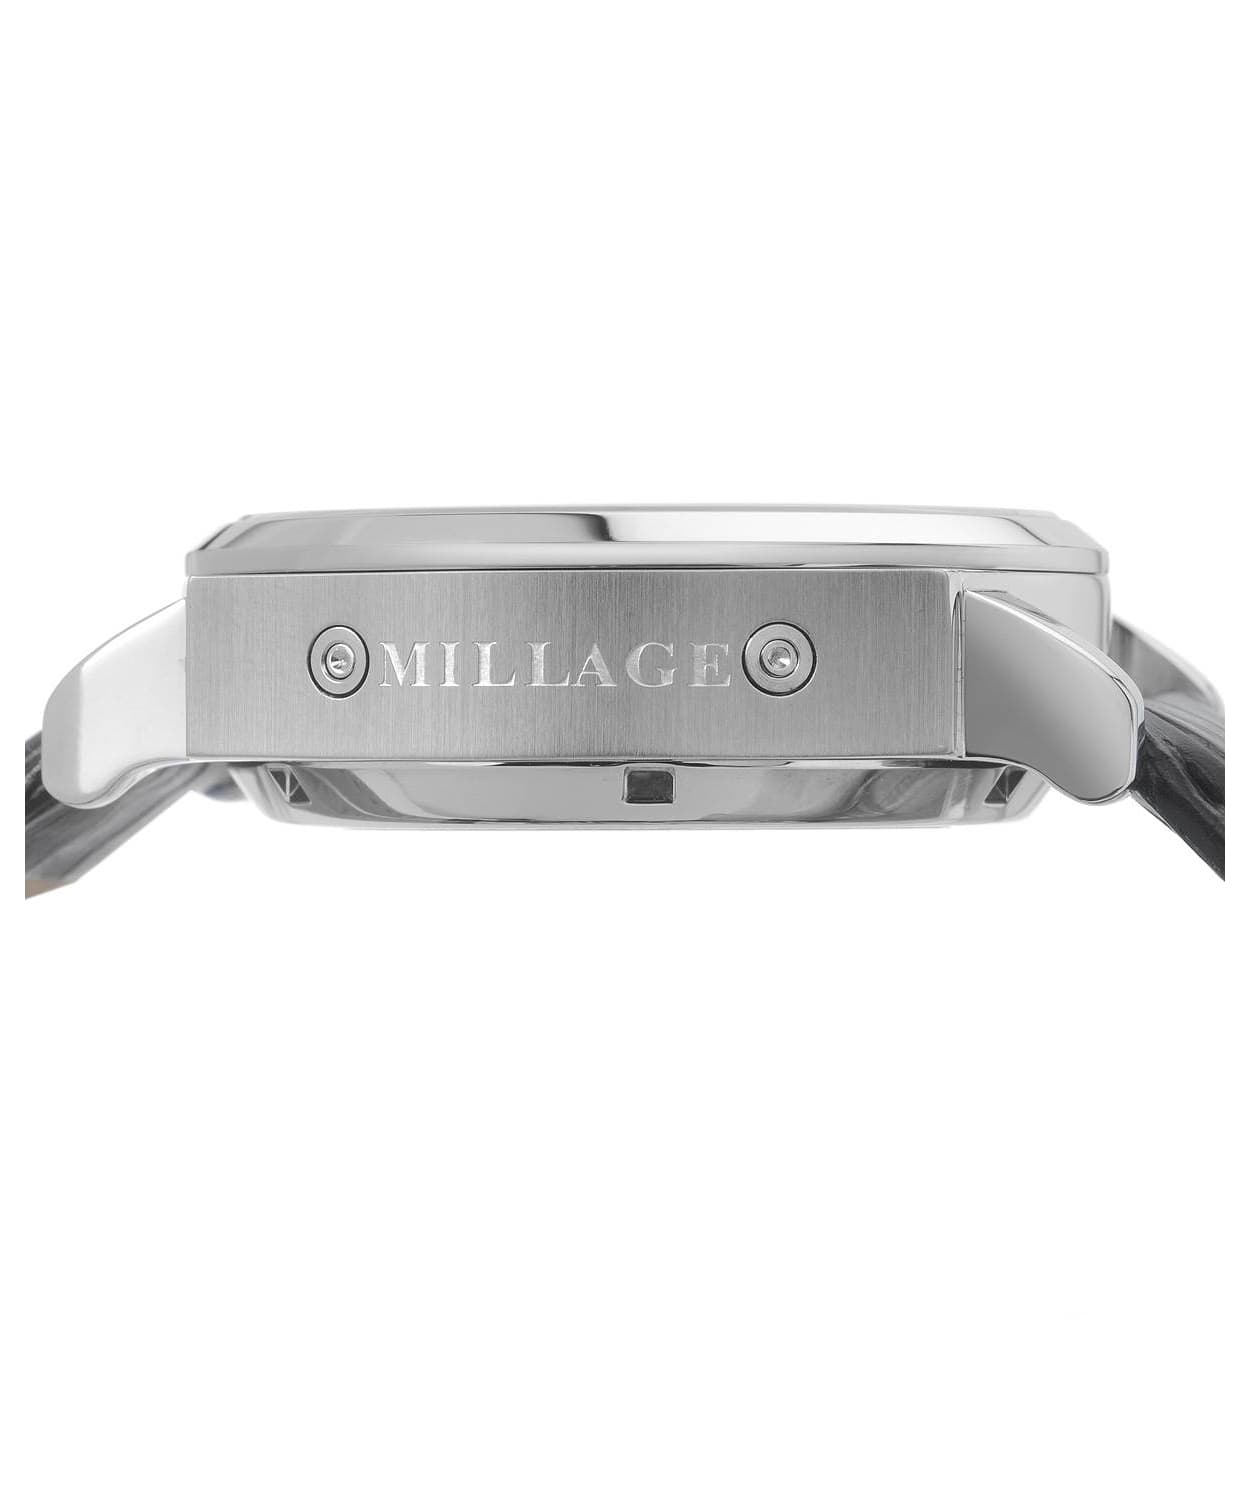 Millage Tourbillion Collection Model M2326 Watch - Automatic Movement View 3